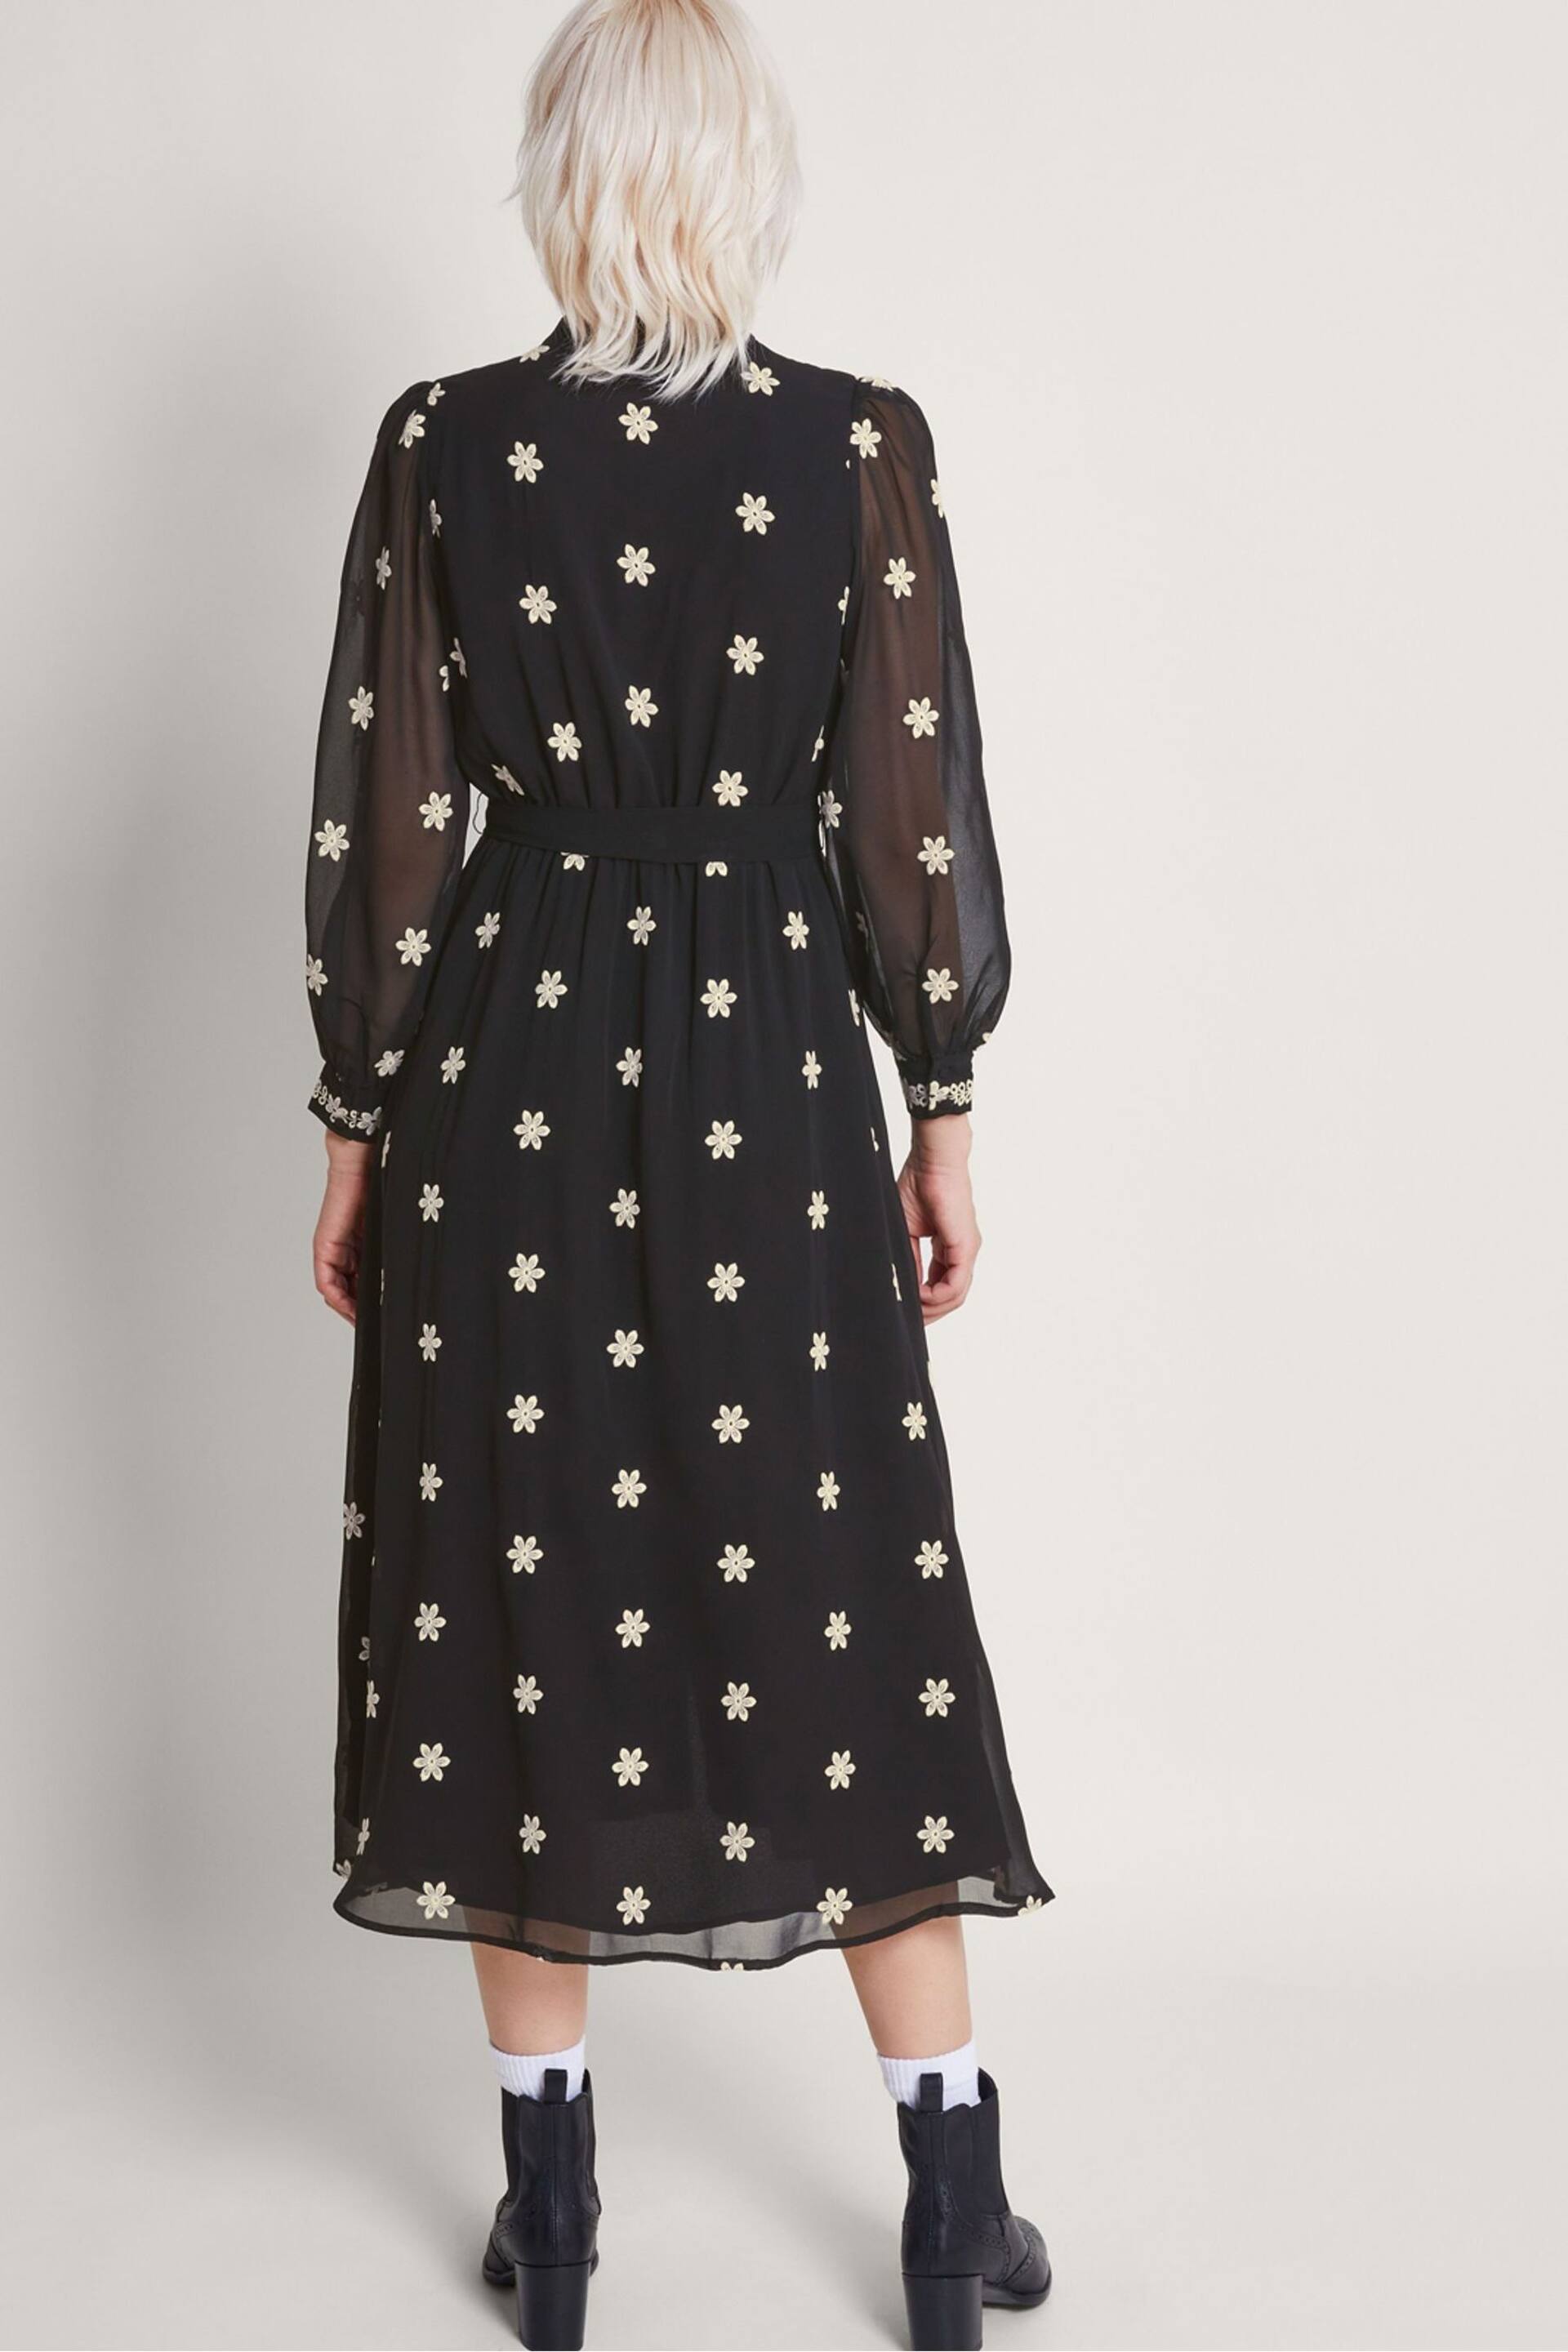 Monsoon Black Embroidered Fiori Shirt Dress - Image 2 of 5